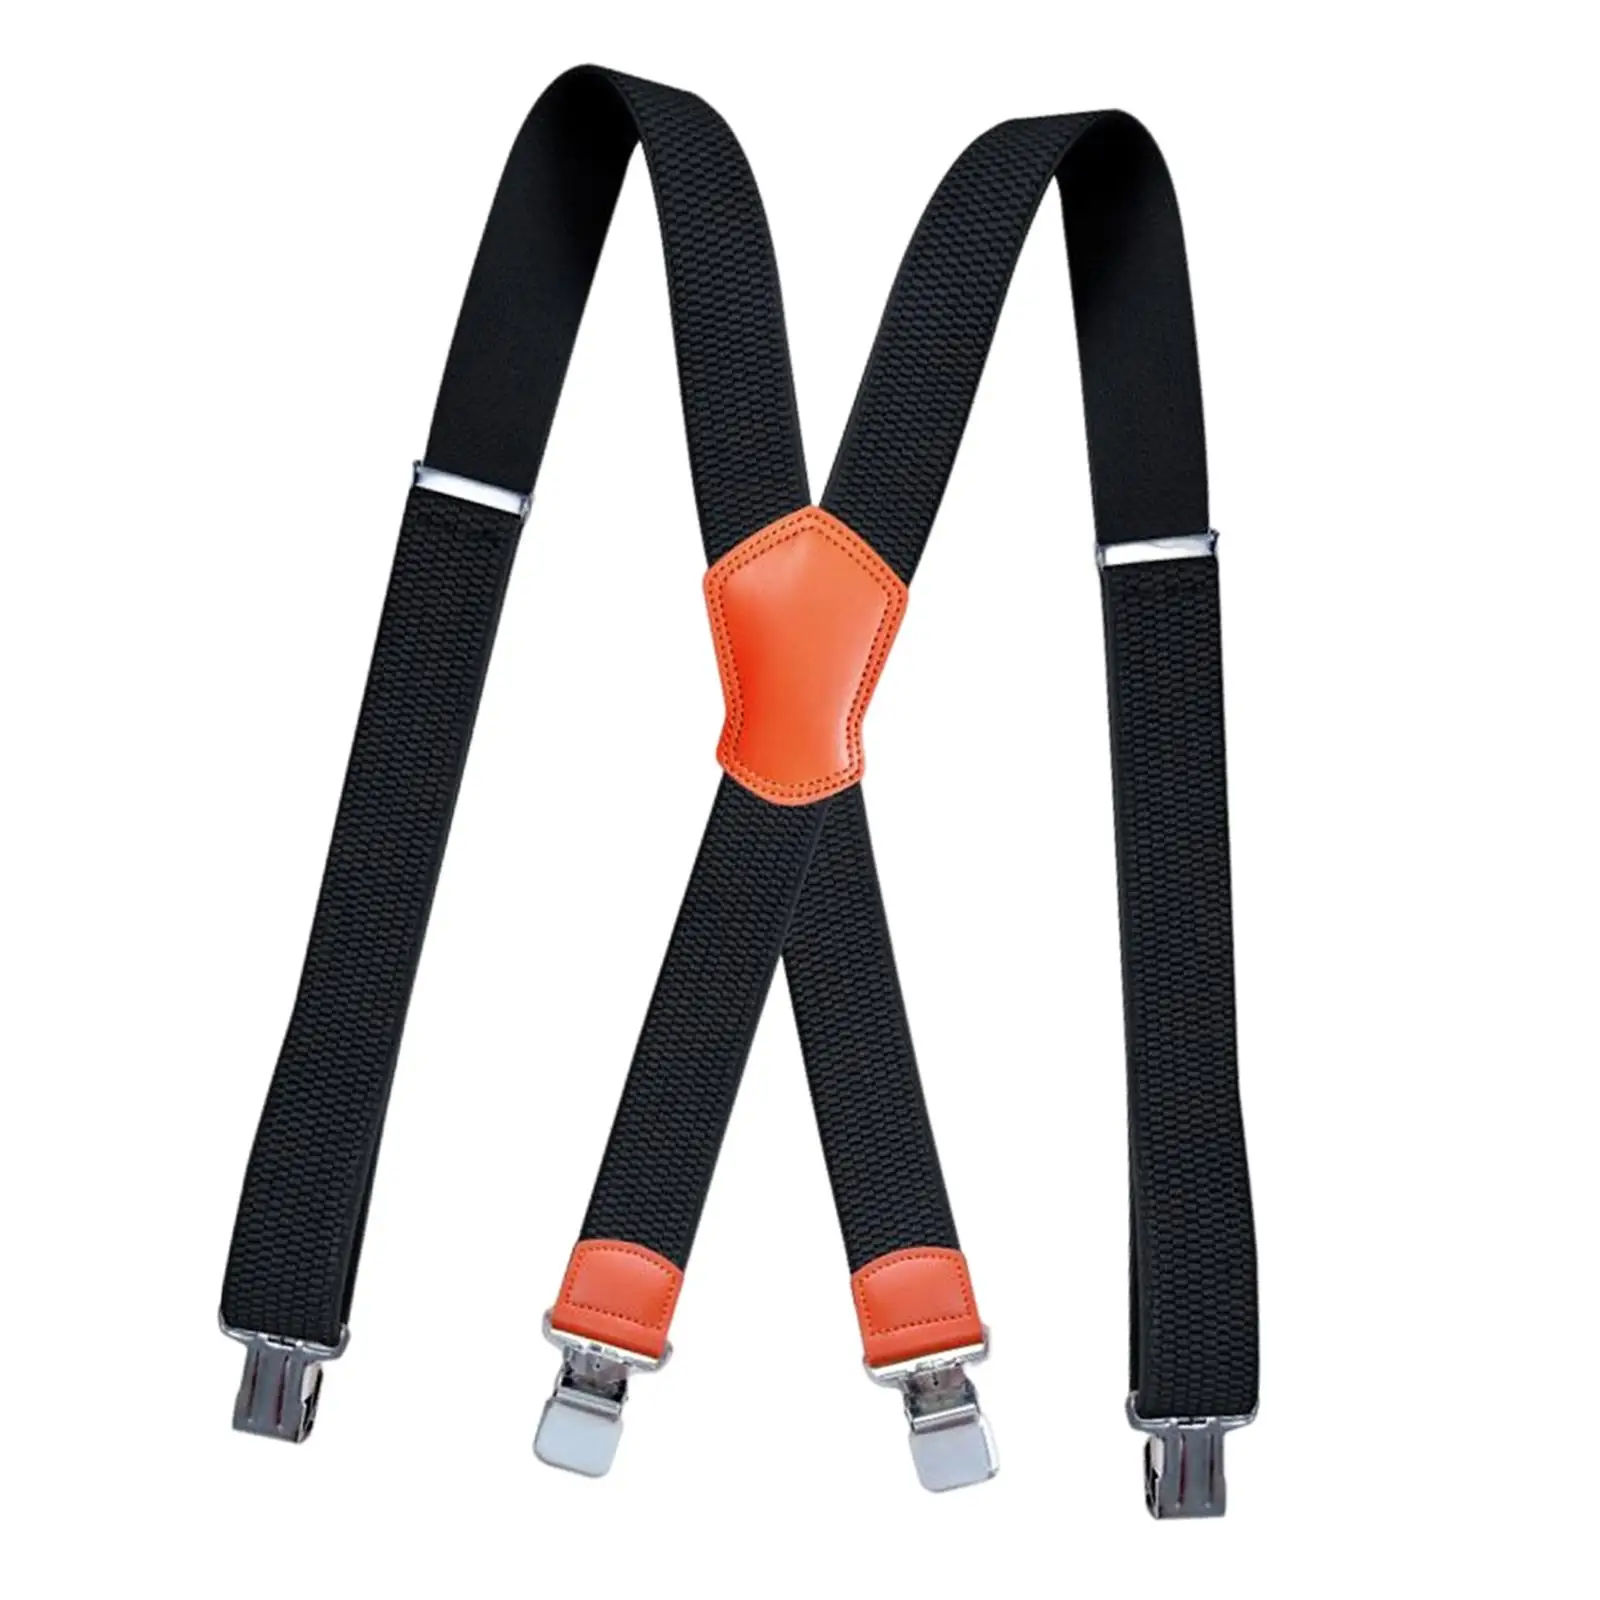 Suspender for Men, X Type Elastic Wide Suspenders with 4 Gripper Clasps Belt Loops Adjustable Heavy Duty Trousers